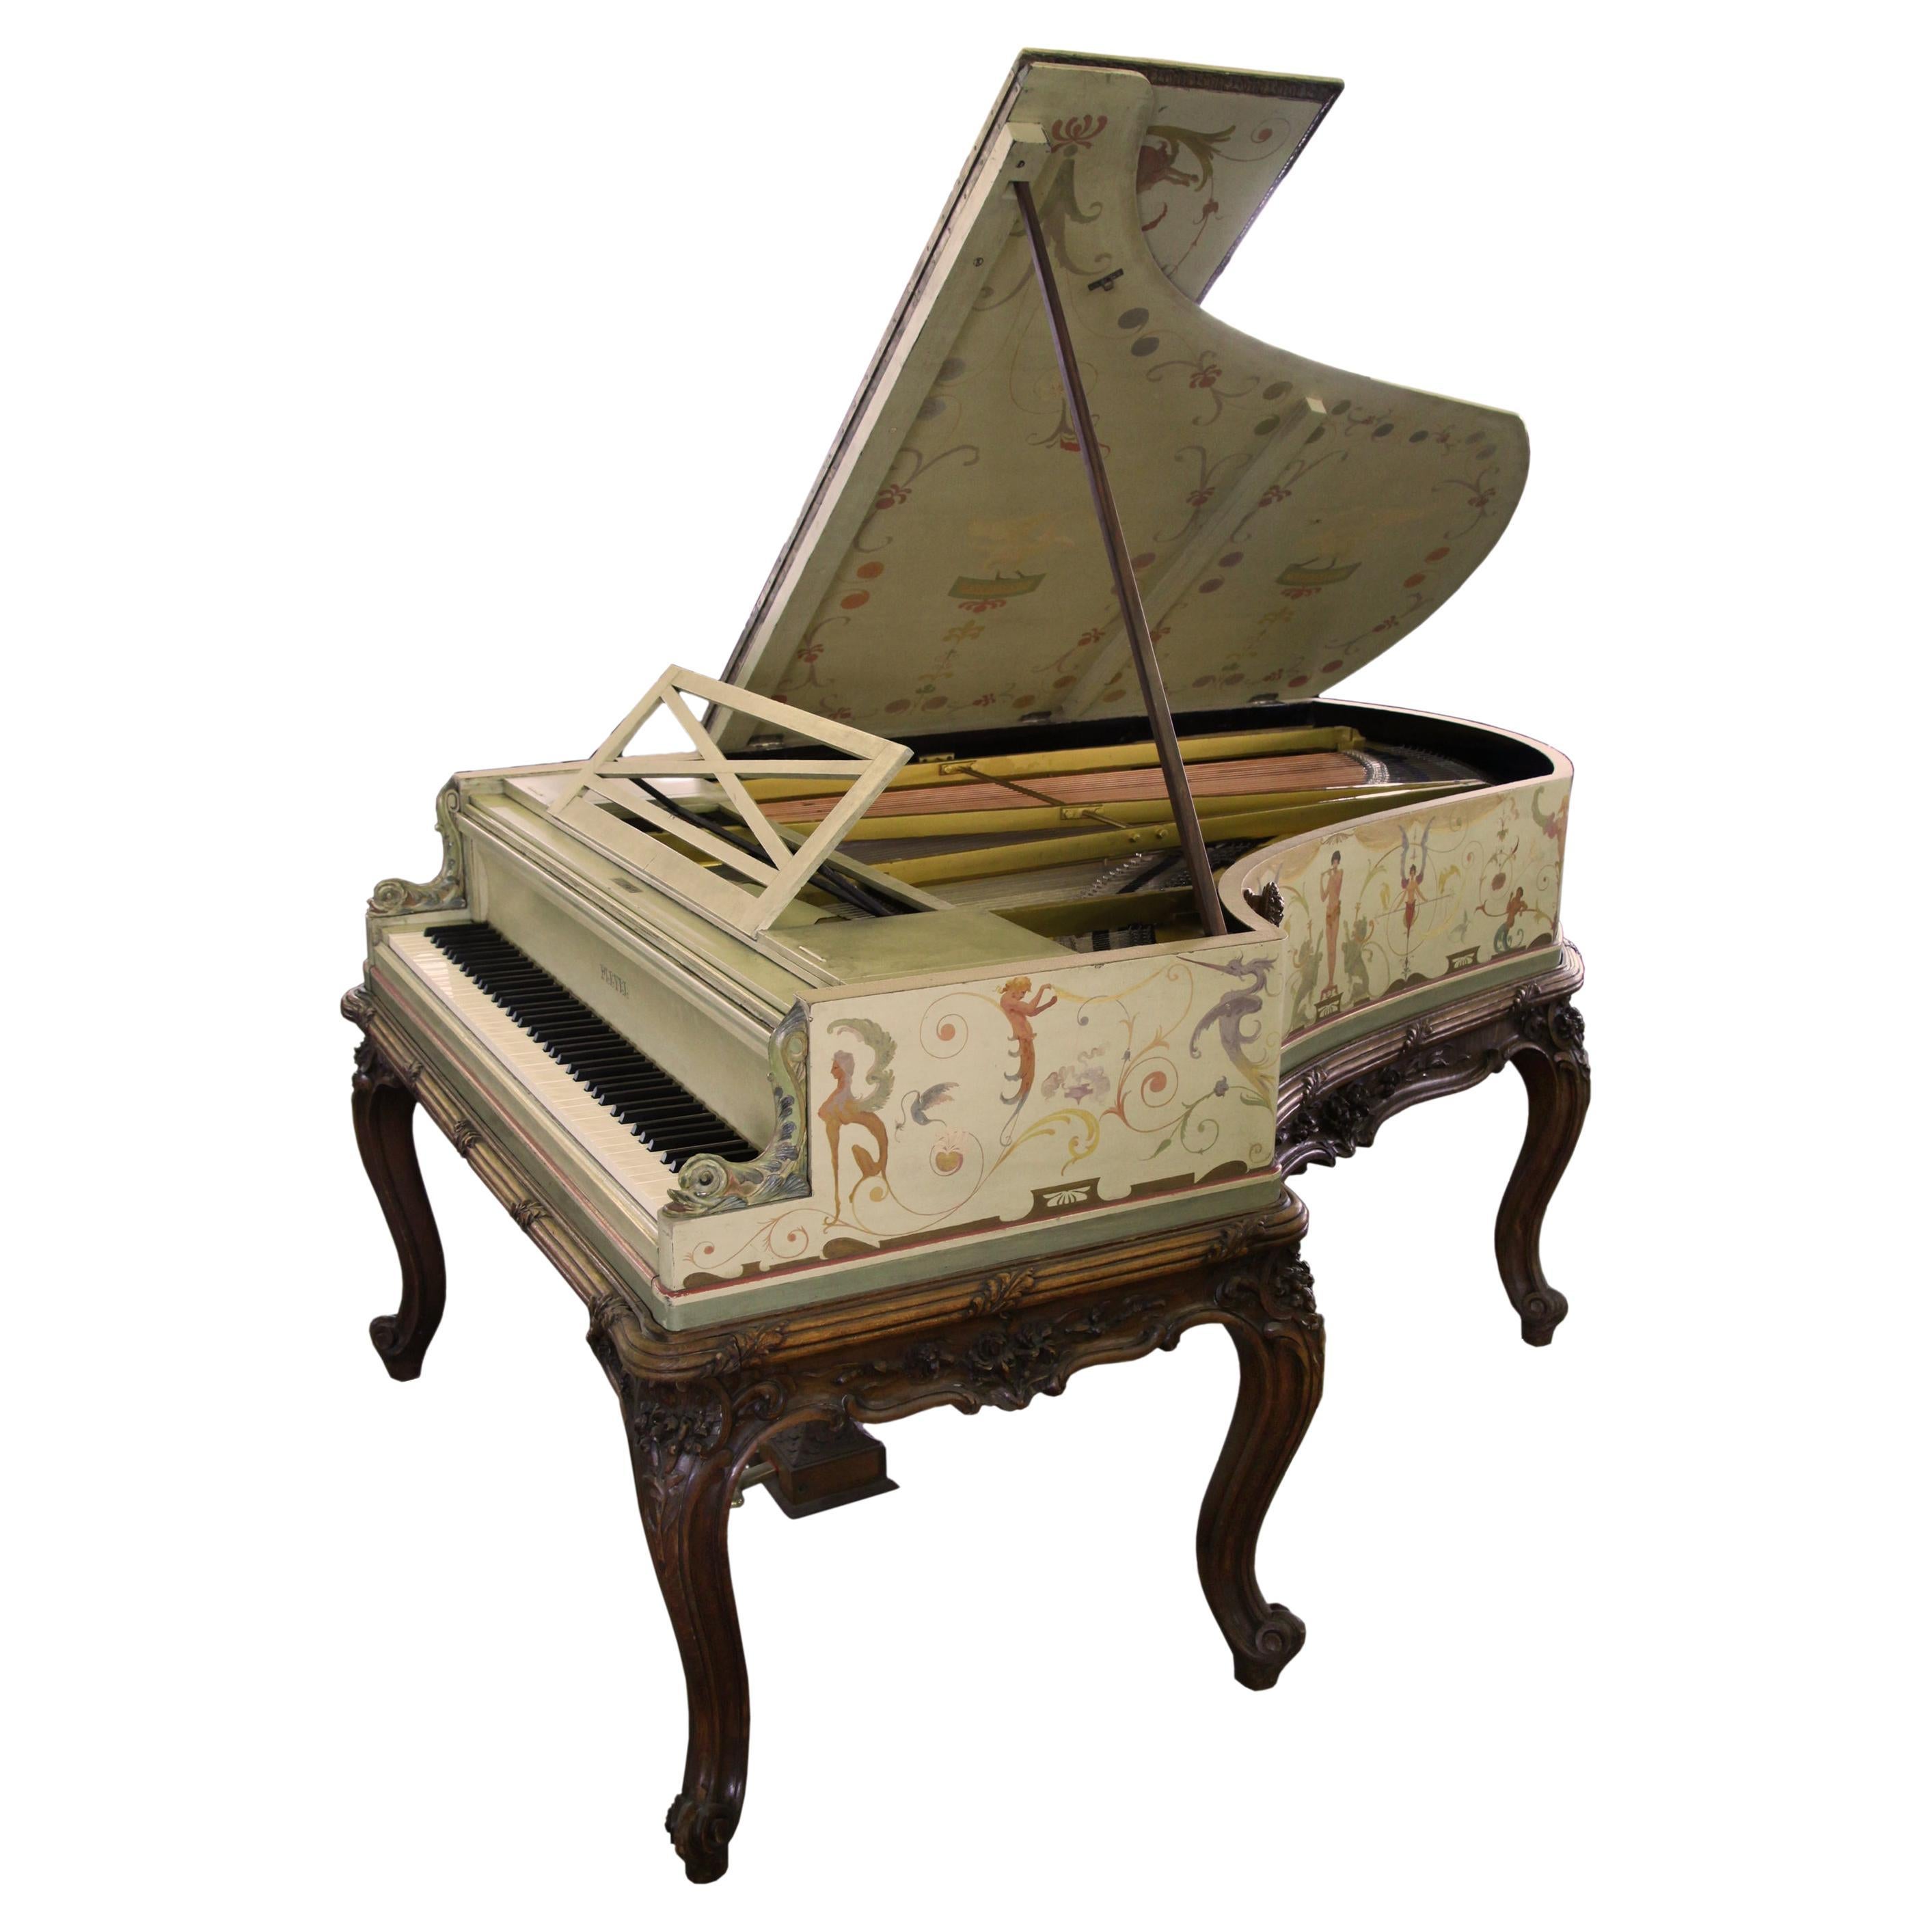 Pleyel Grand Piano Hand-Painted Berainesque Style Cabriole Leg Signed G. Meunier